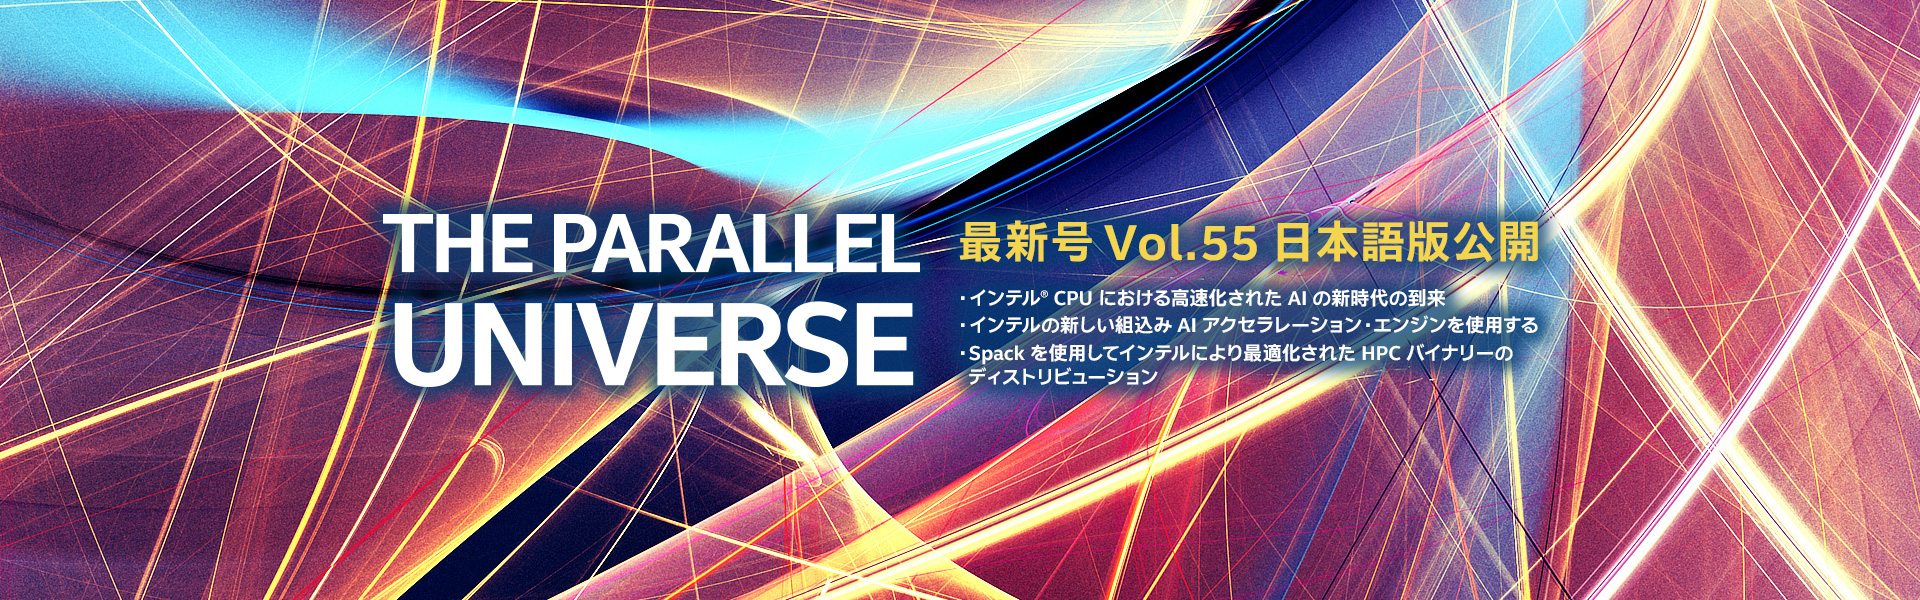 The Parallel Universe 最新号 Vol.55 日本語版公開中